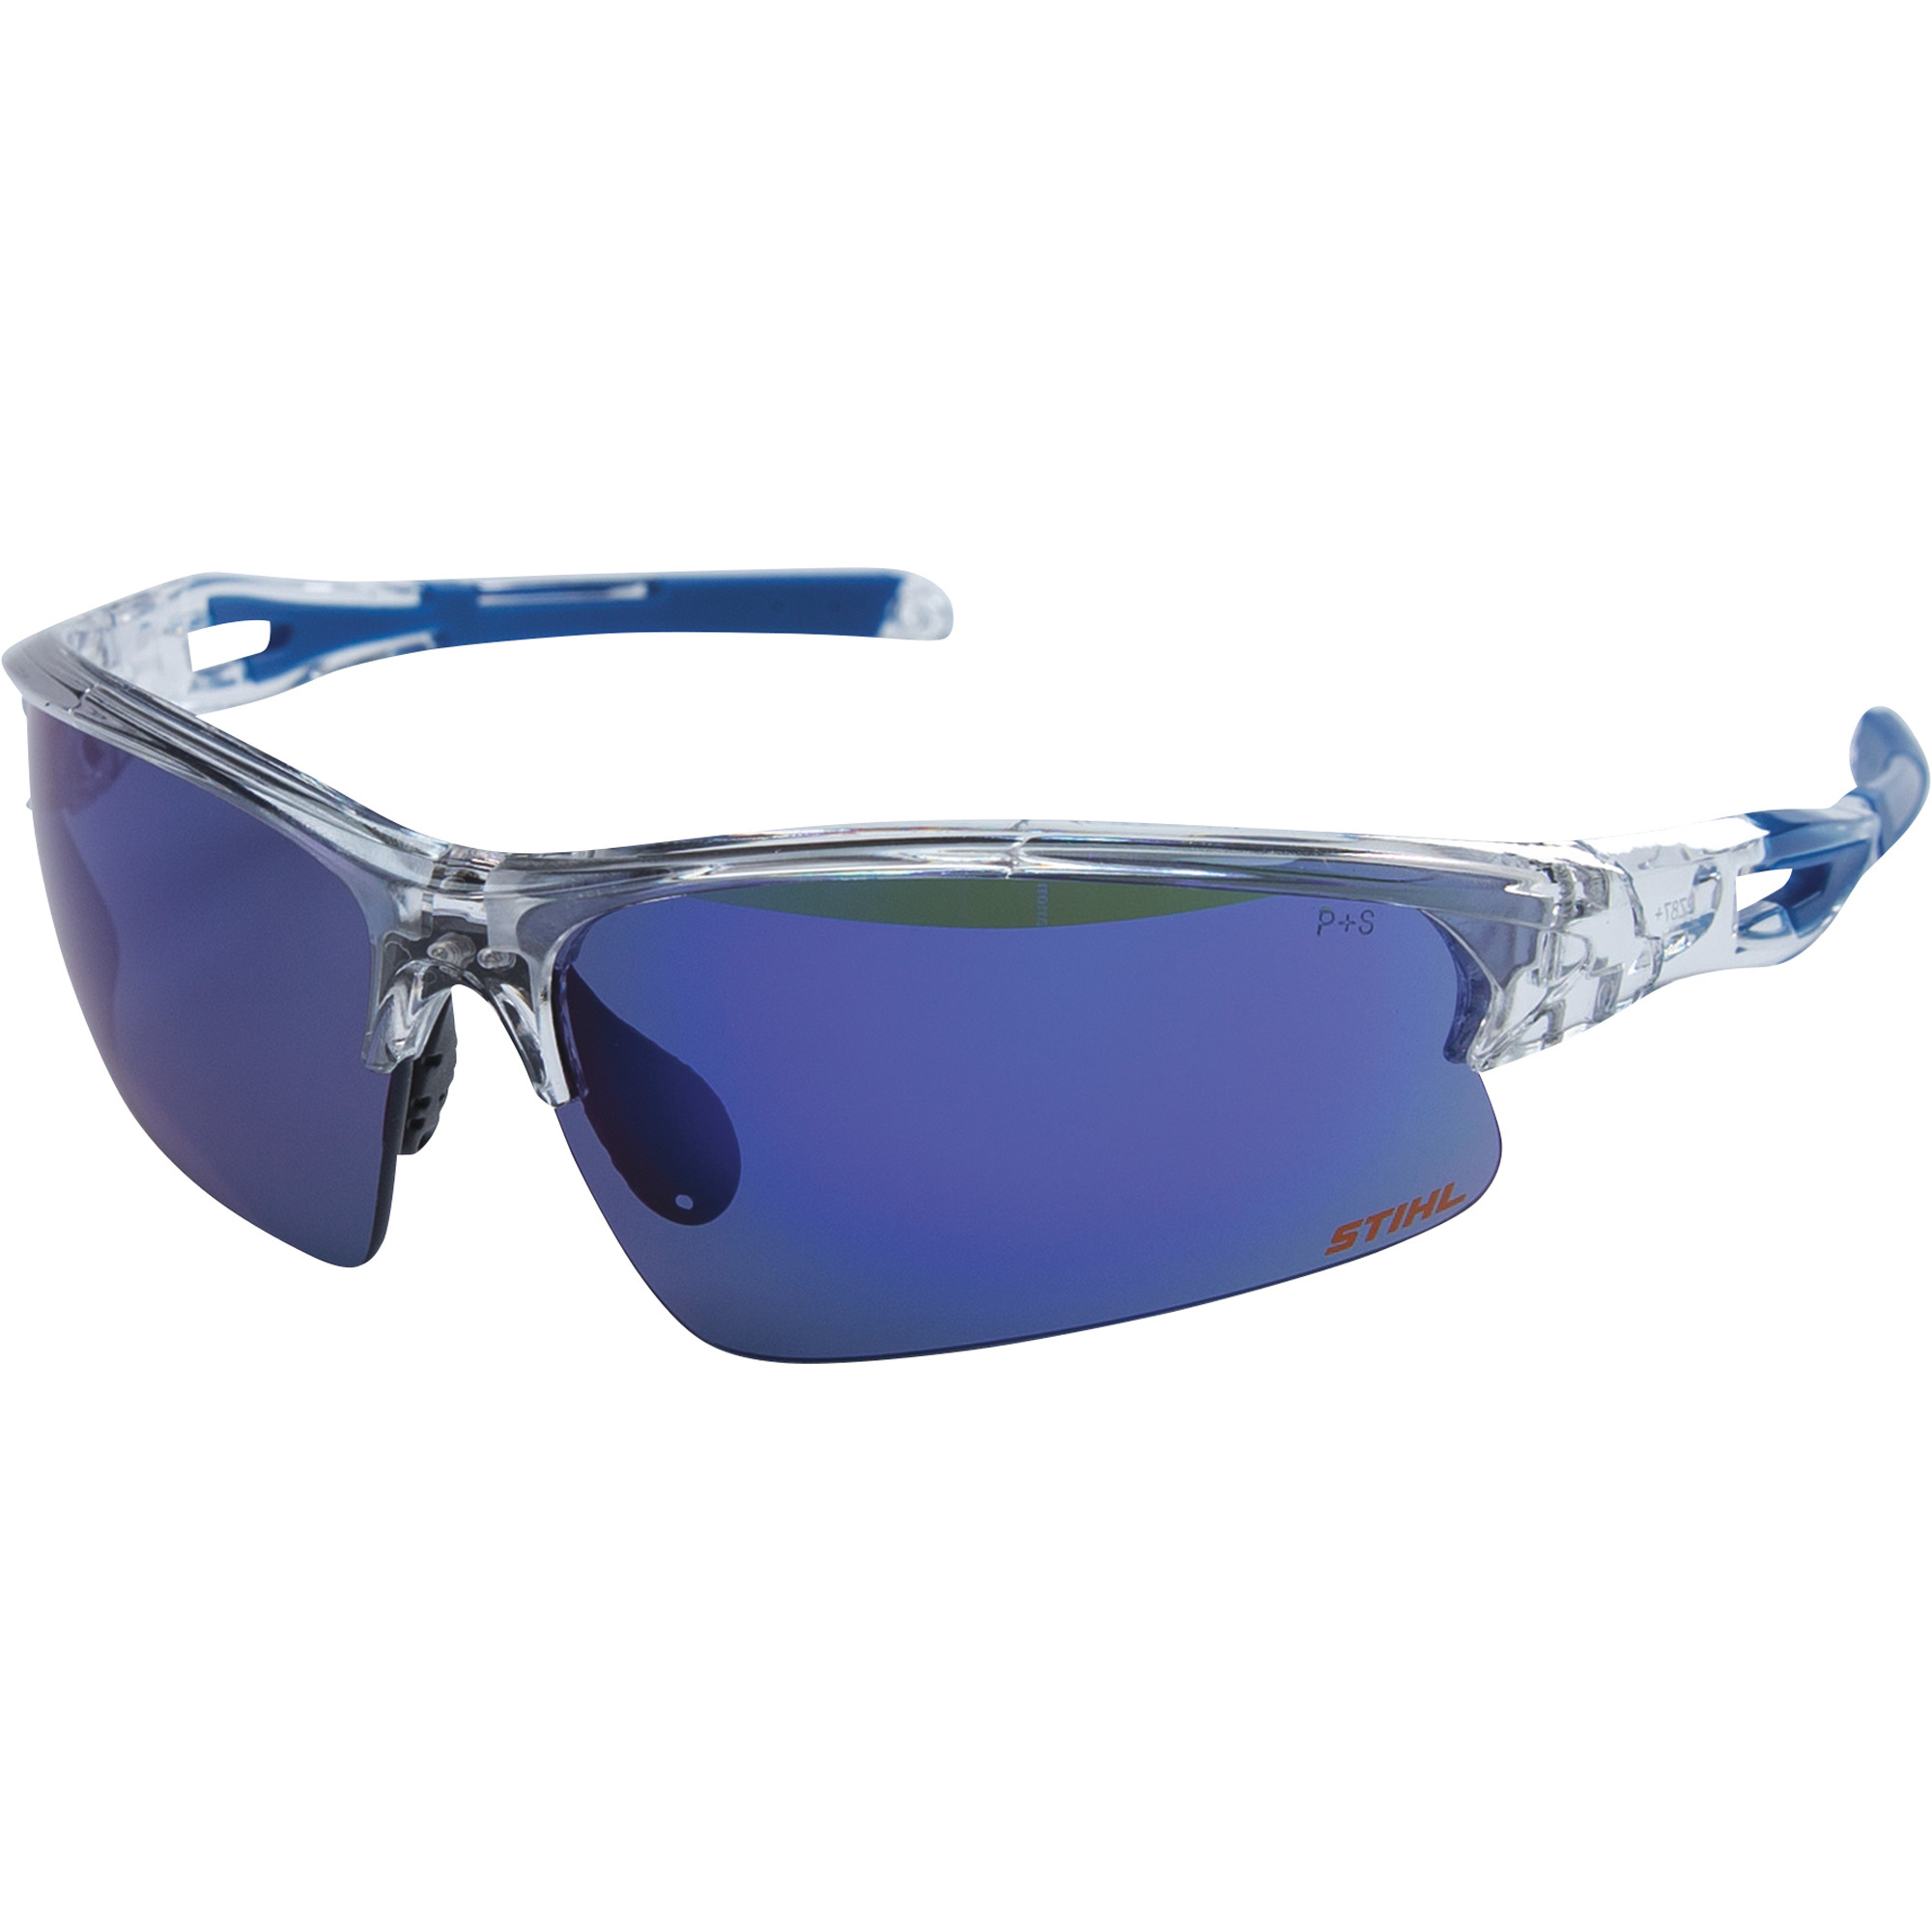 STIHL Clear Vista Protective Glasses â Blue Lenses